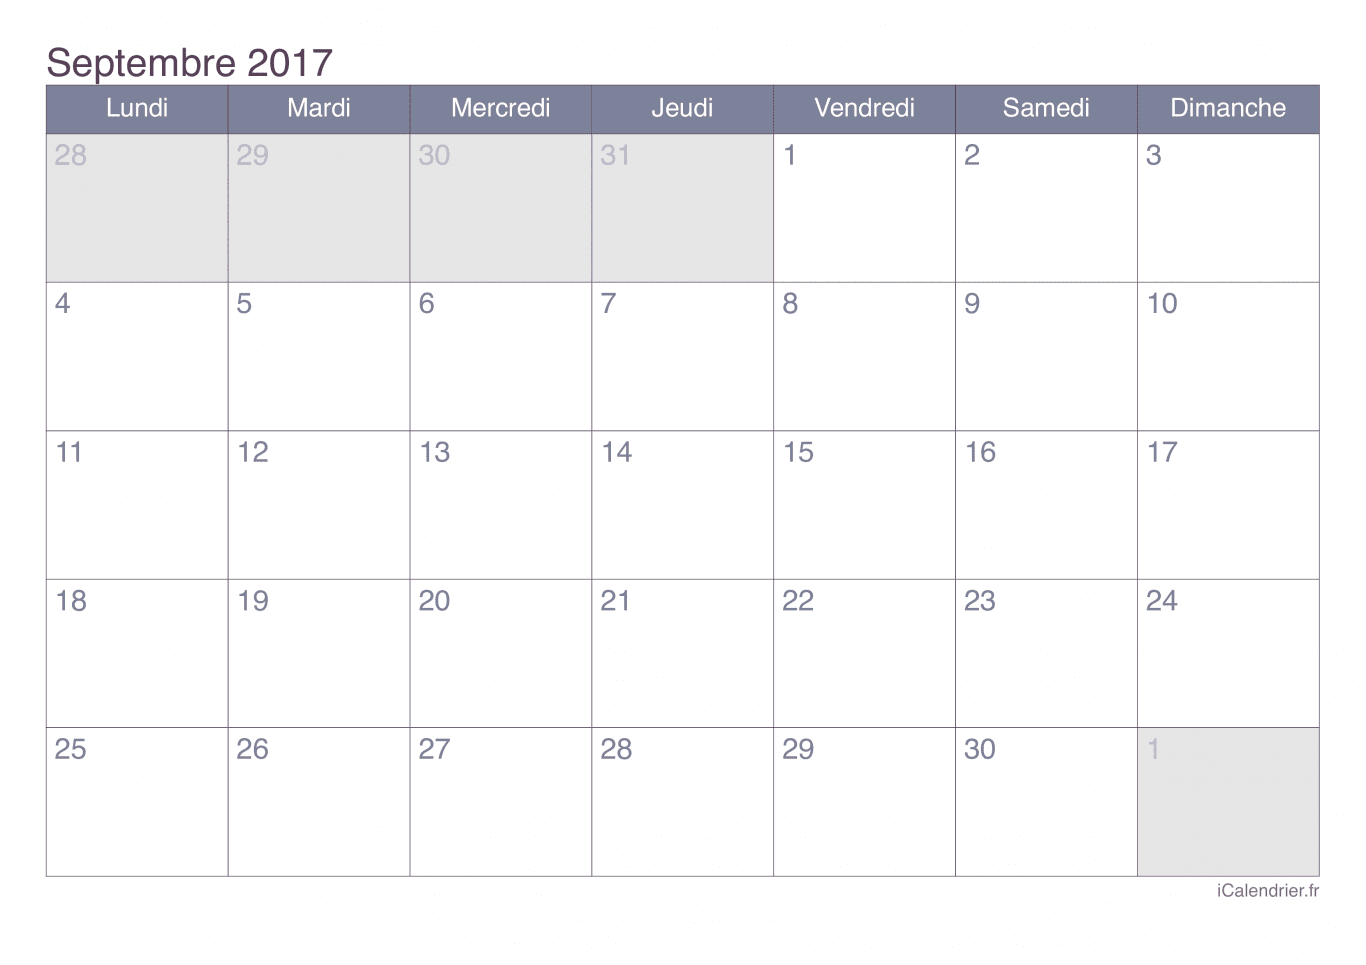 Calendrier de septembre 2017 - Office